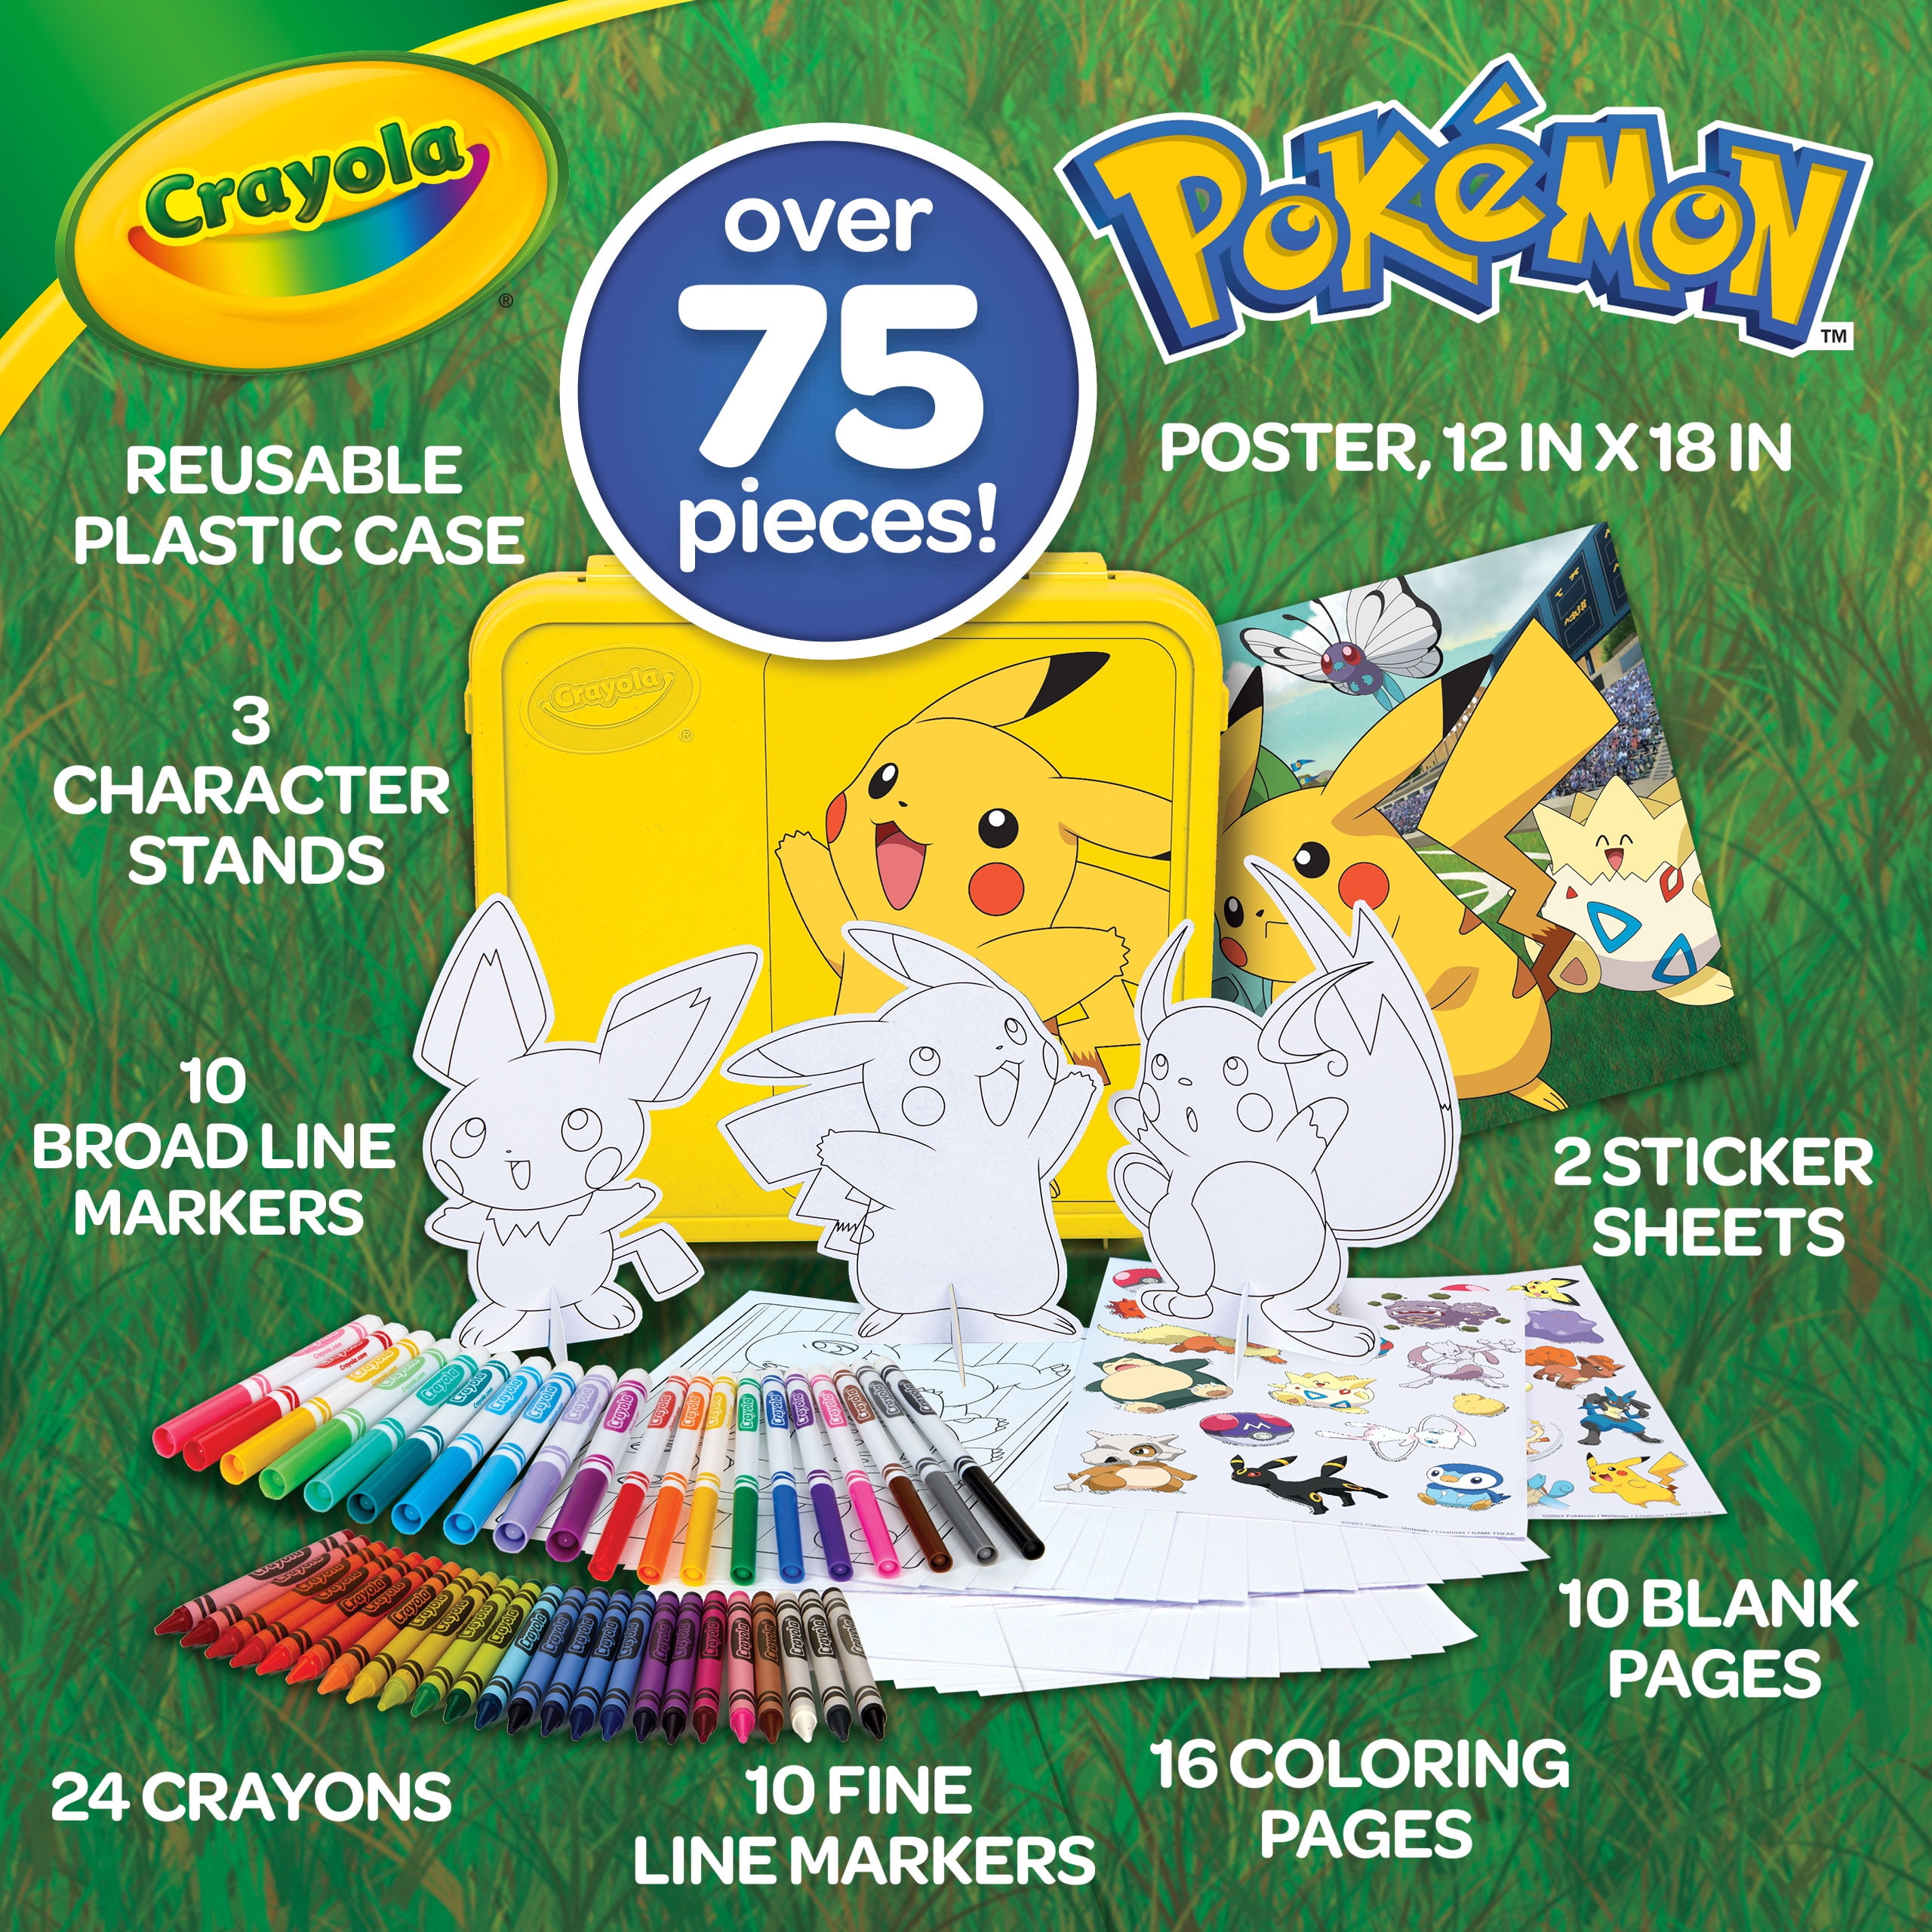 Mejores ofertas e historial de precios de Crayola Pokémon Loose Leaf  Coloring Pages, 28 Pages, Aged Up Coloring, Gifts for Kids, Ages 8+ en